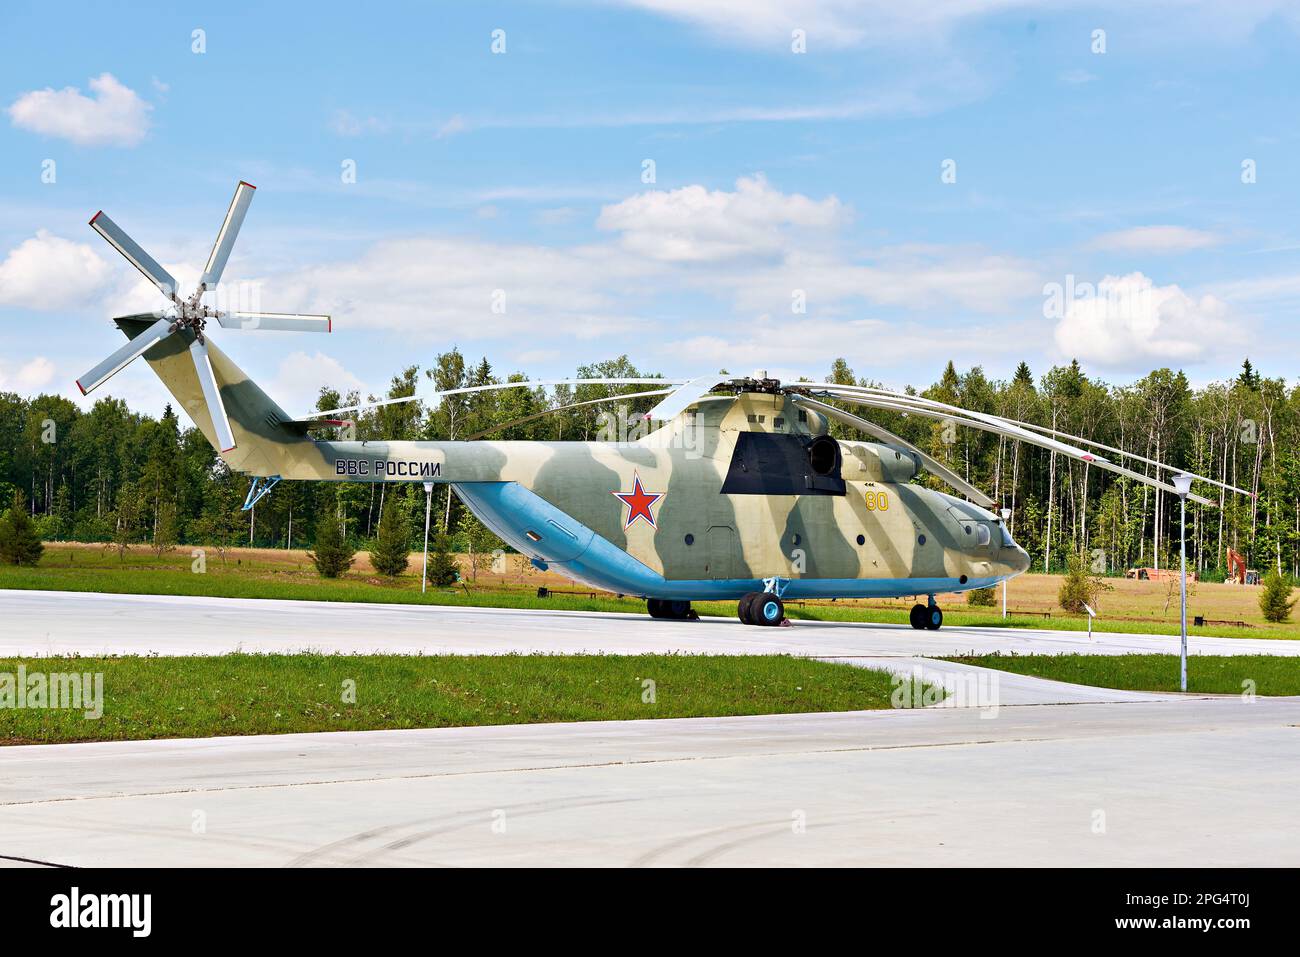 PARK PATRIOT, KUBINKA, MOSCOW REGION, RUSSIA - July 11, 2017: Mi-26 Russian heavy transport helicopter Stock Photo